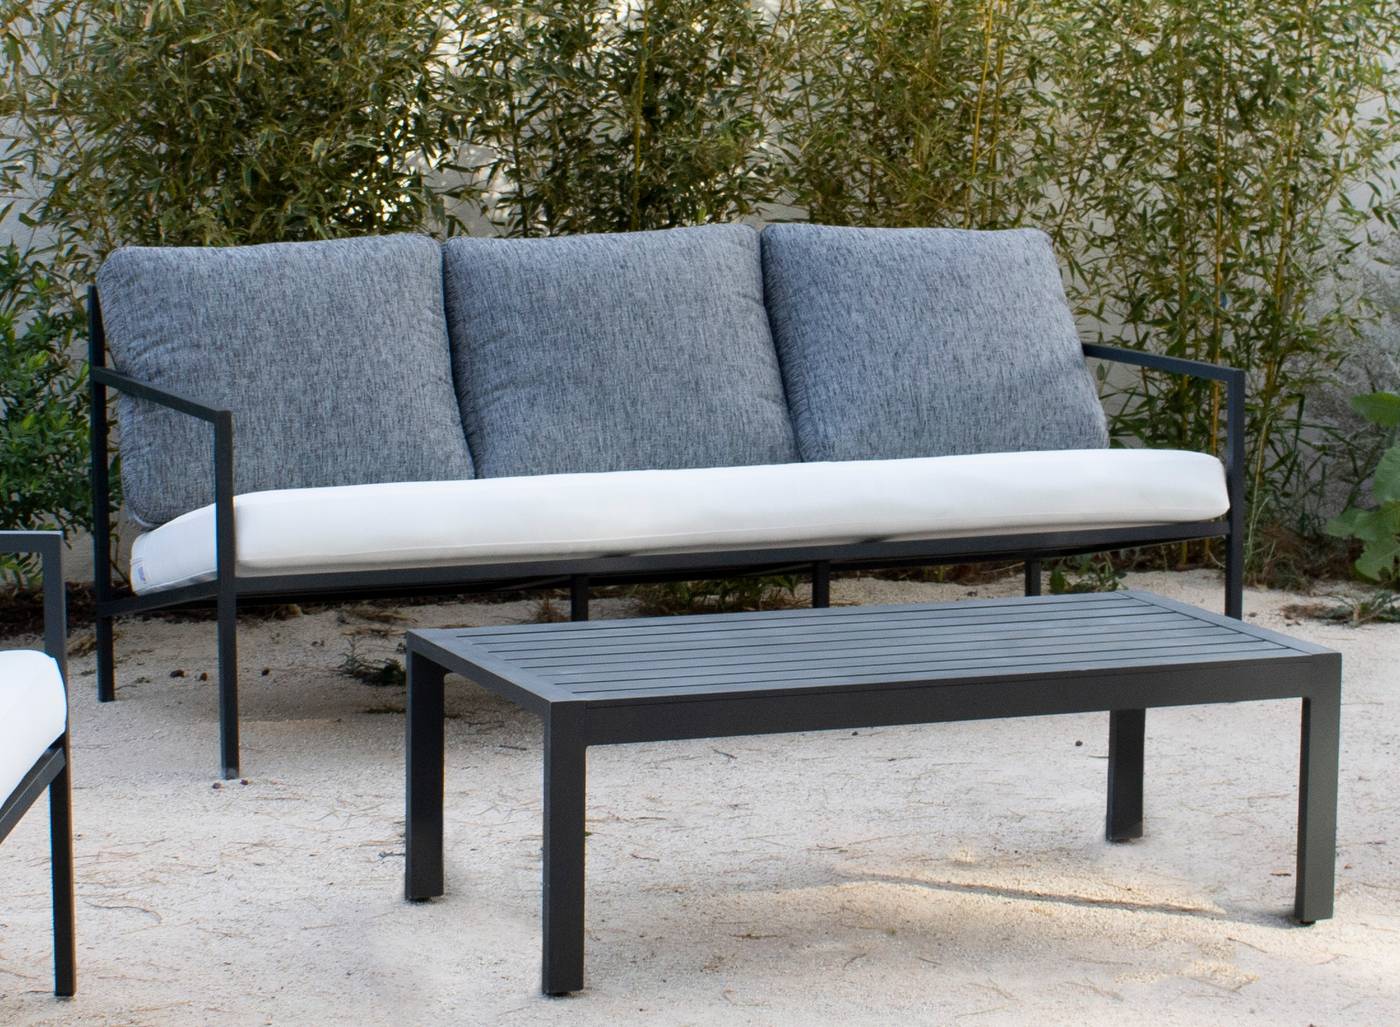 Set Aluminio Capri-8 - Conjunto aluminio: sofá 3 plazas + 2 sillones + 1 mesa de centro. Estructura color blanco o antracita.